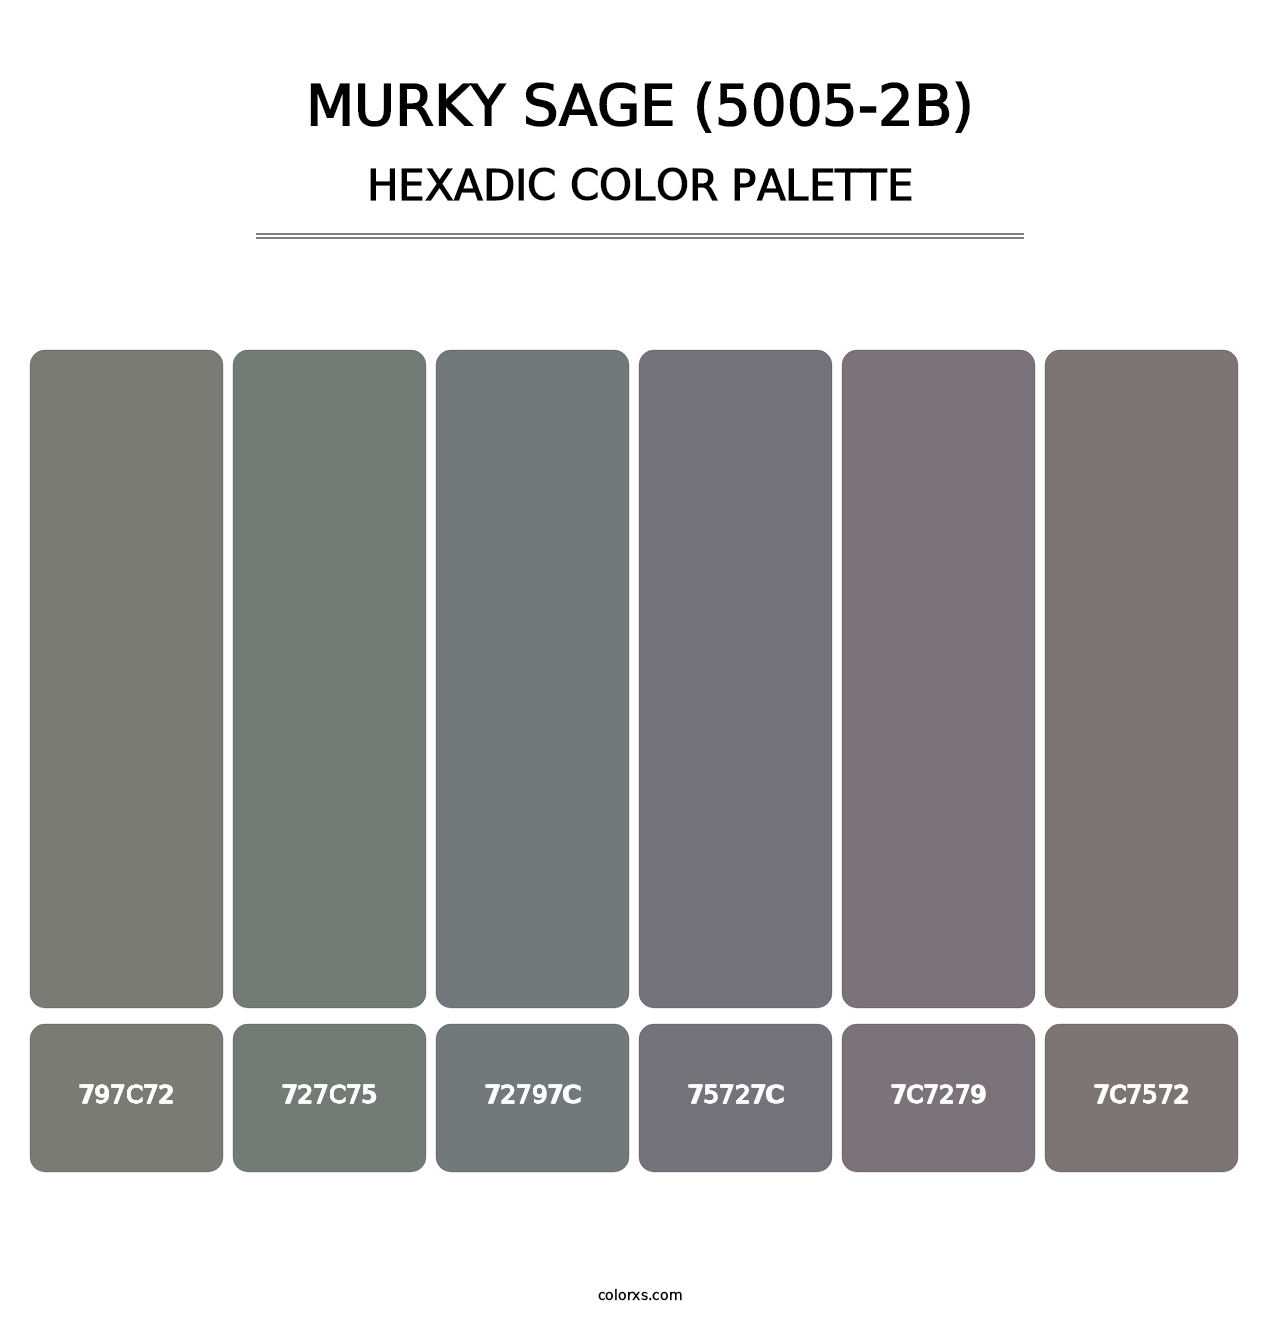 Murky Sage (5005-2B) - Hexadic Color Palette